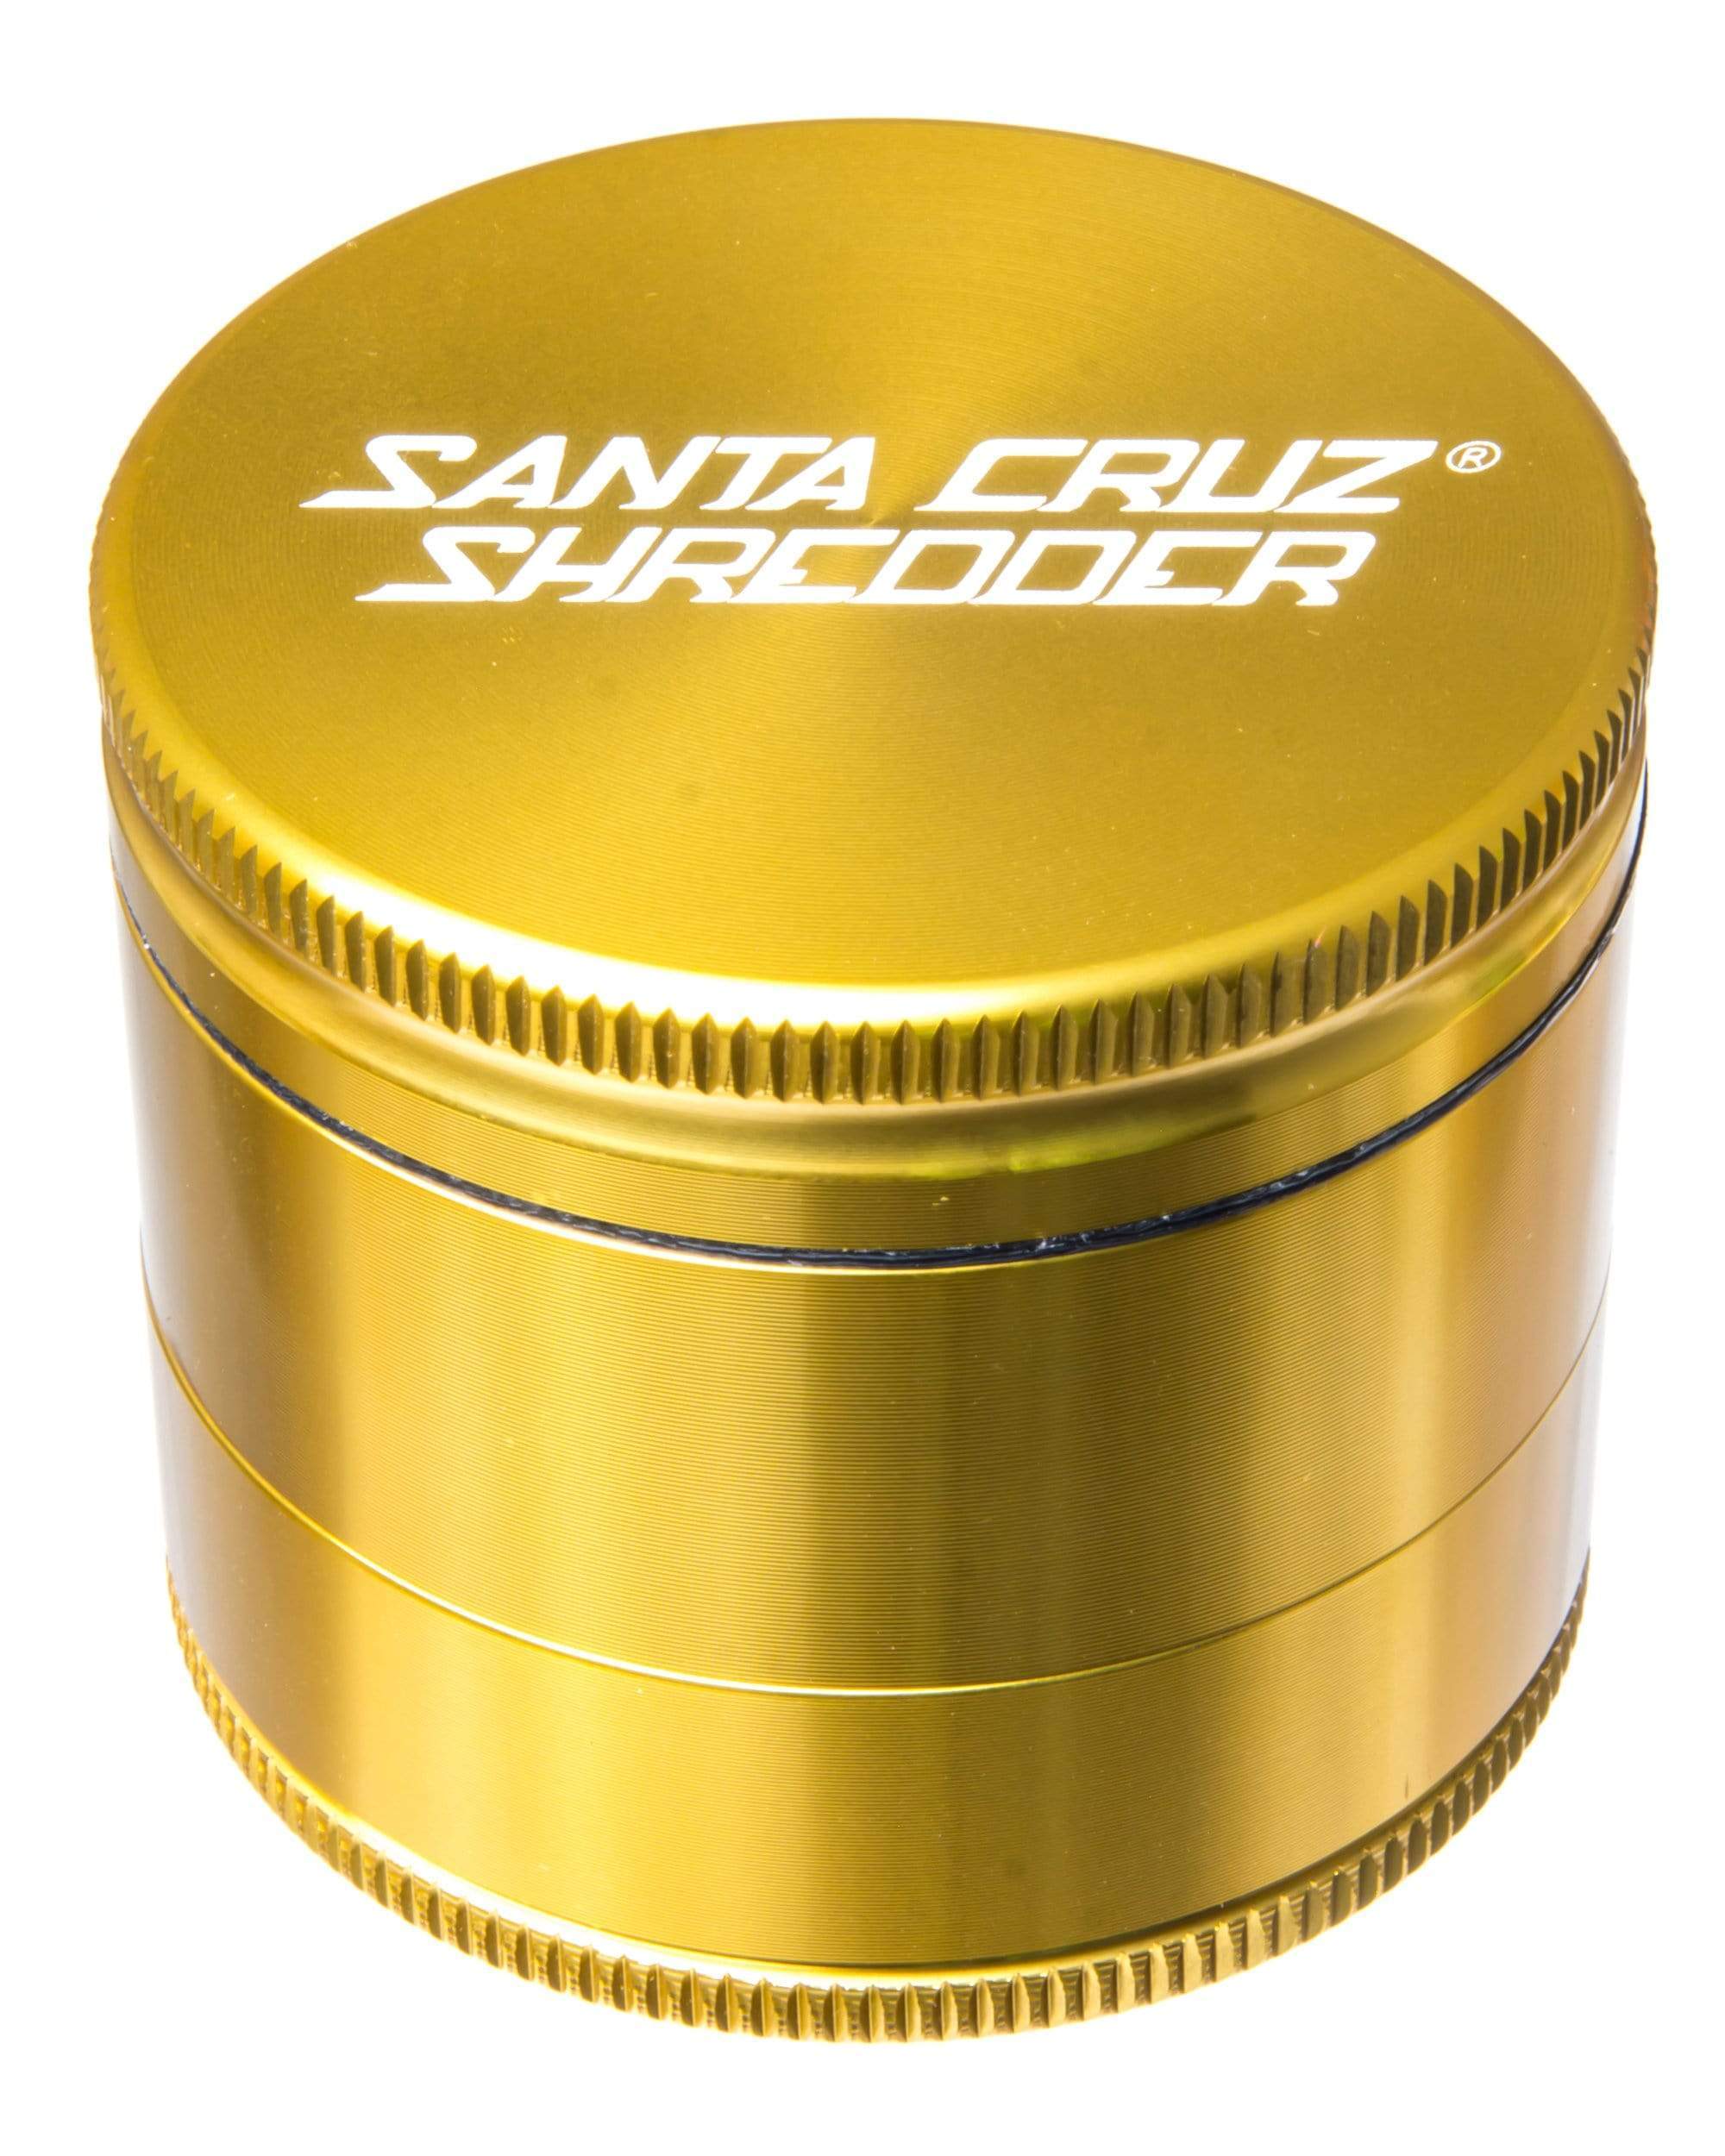 Santa Cruz Shredder Gold grinder 587200000000